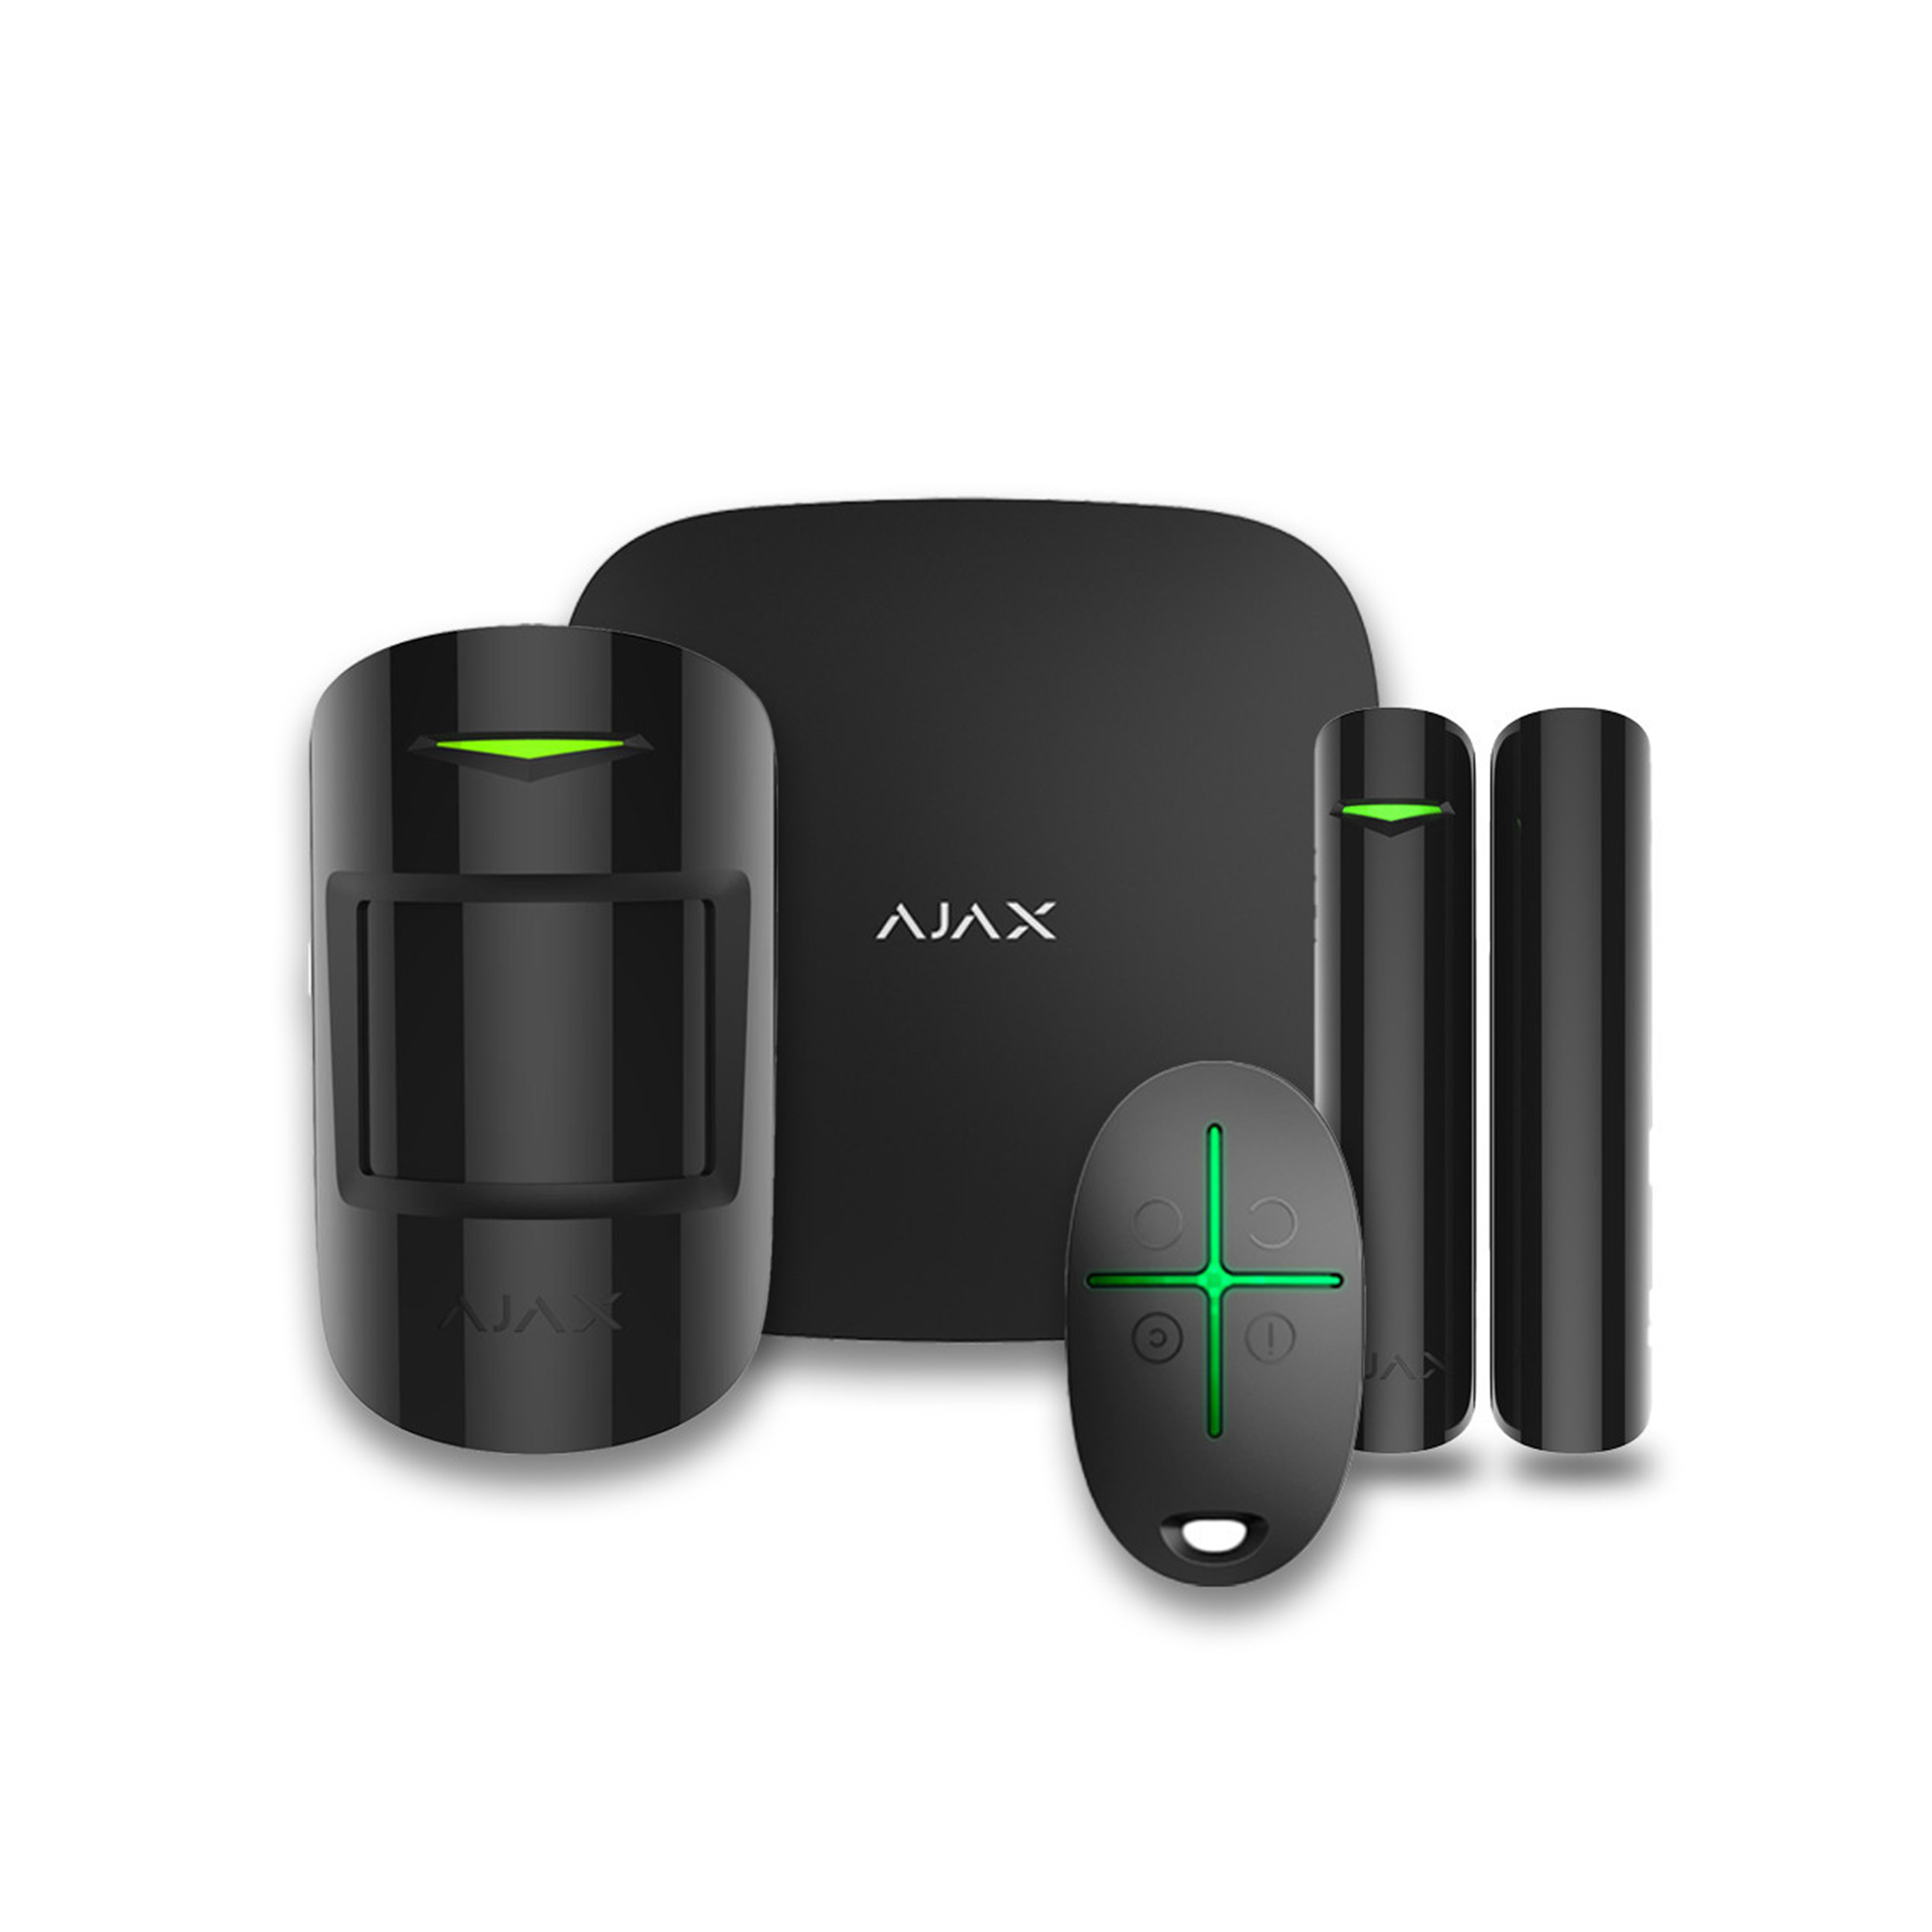 Комплект сигнализации Ajax StarterKit 2 Black